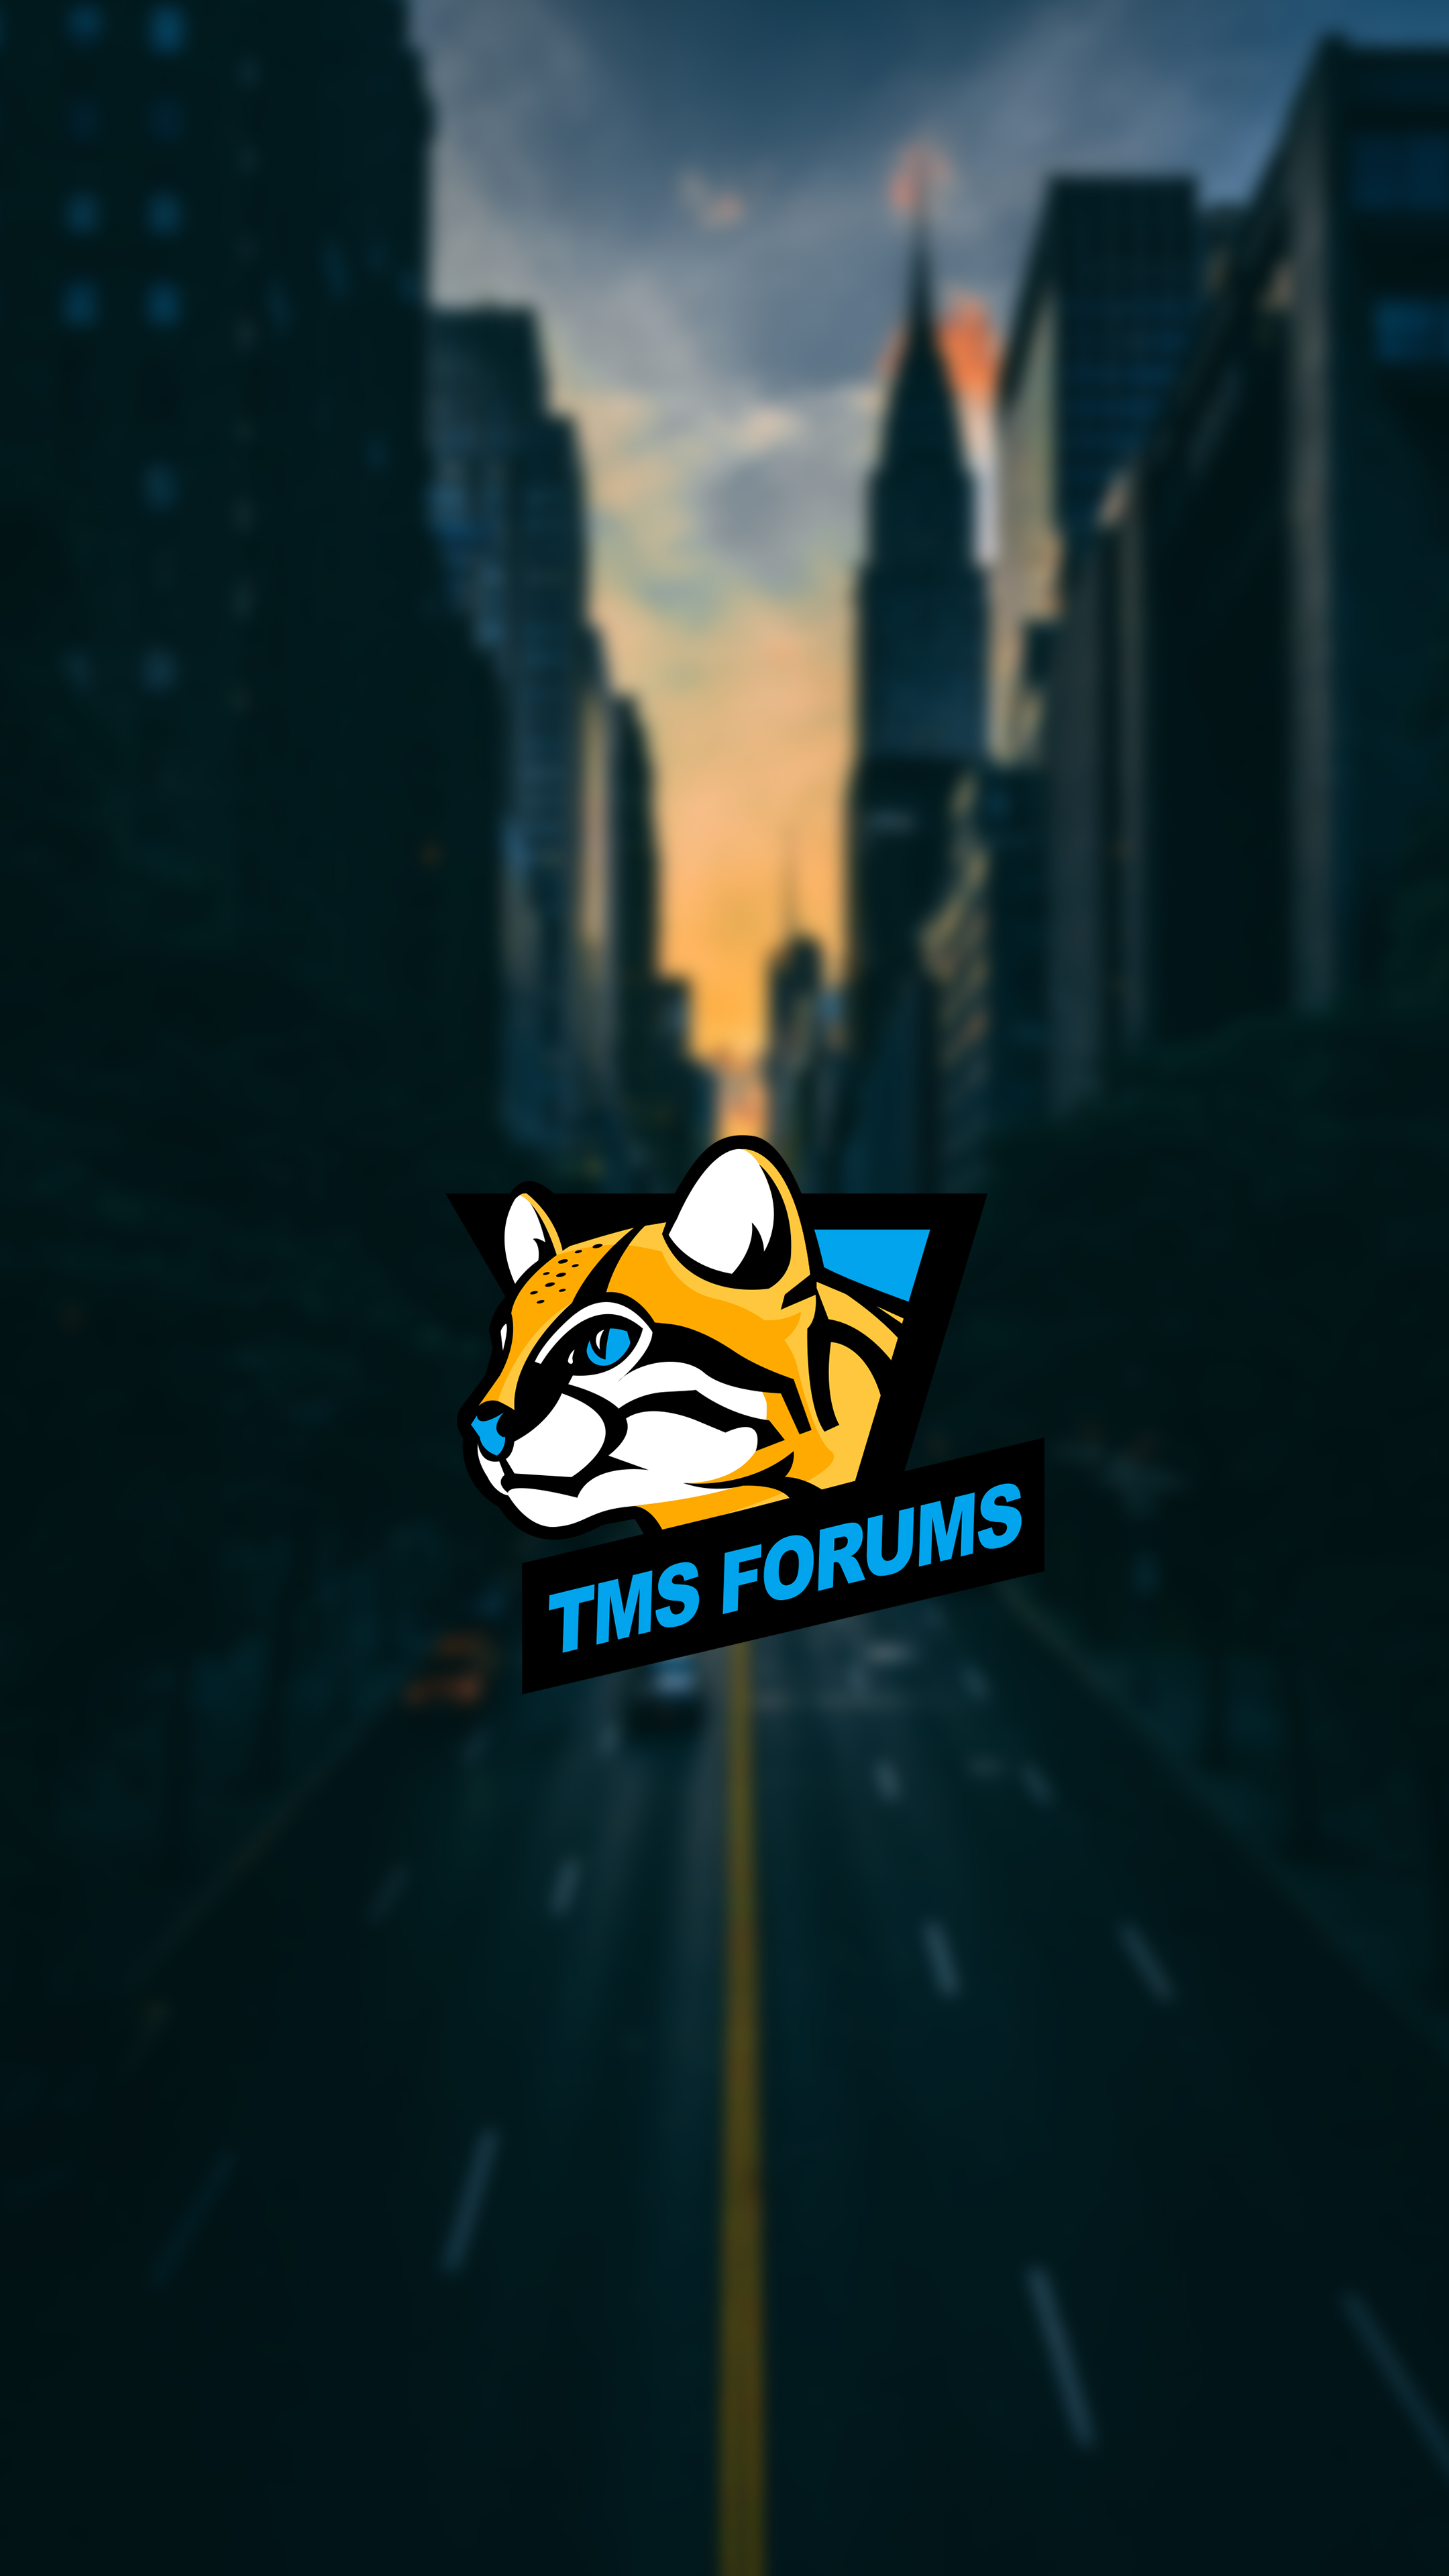 TMS Forums Logo Wallpaper Smartphone NYC.jpg